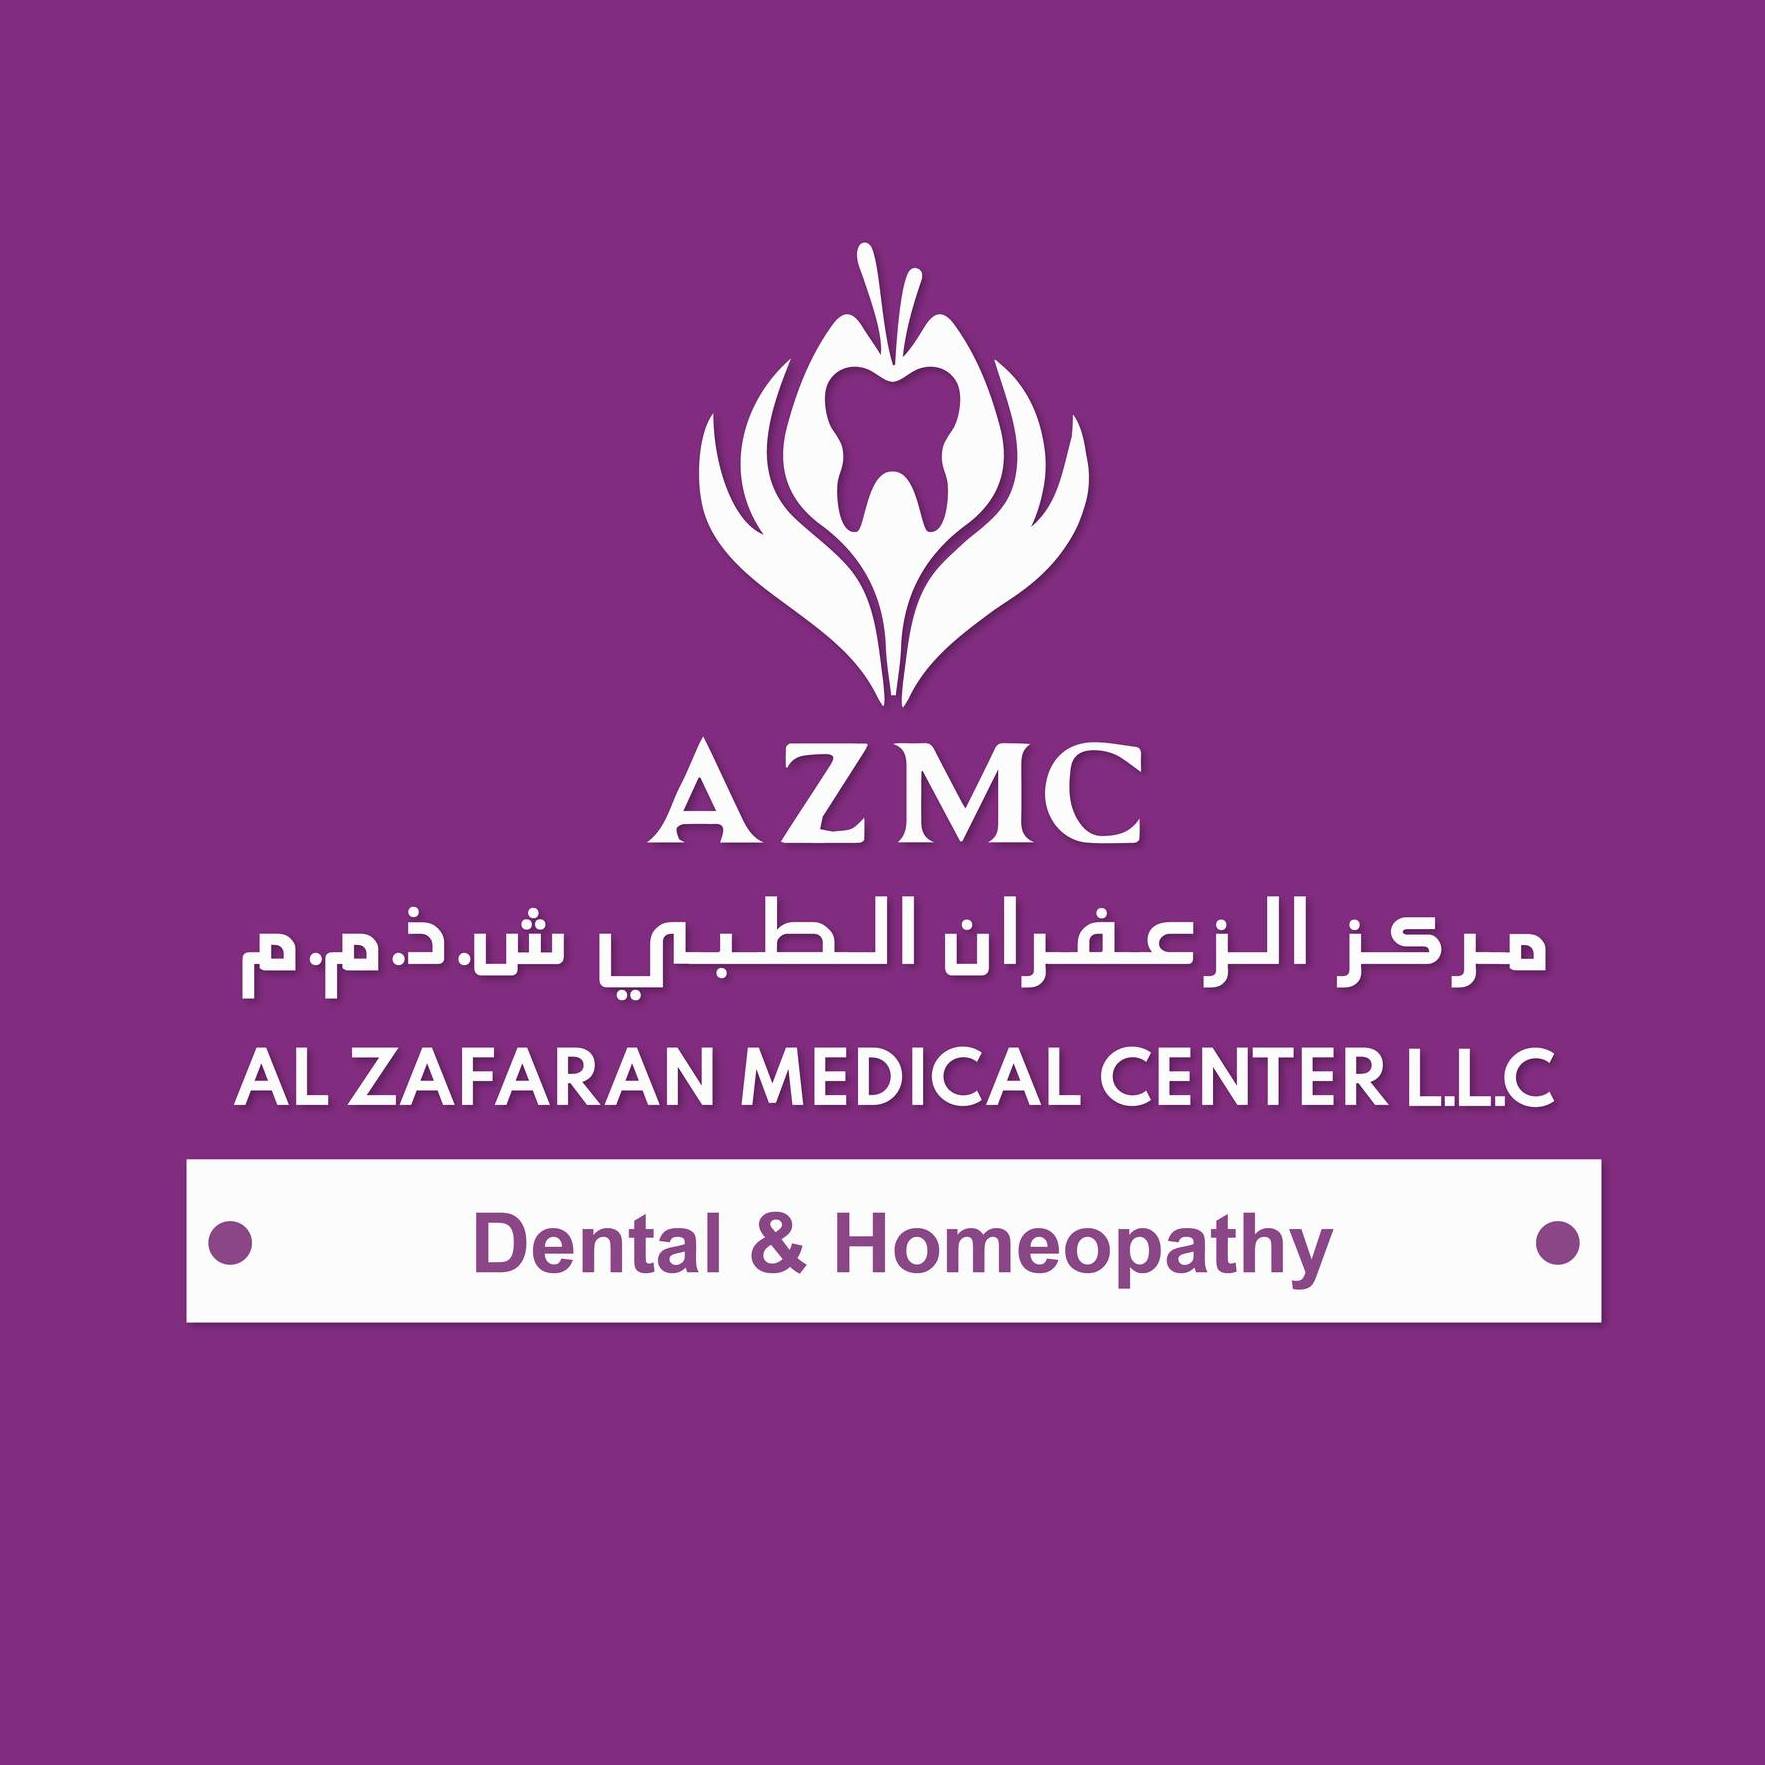 Al Zafaran Medical Center LLC